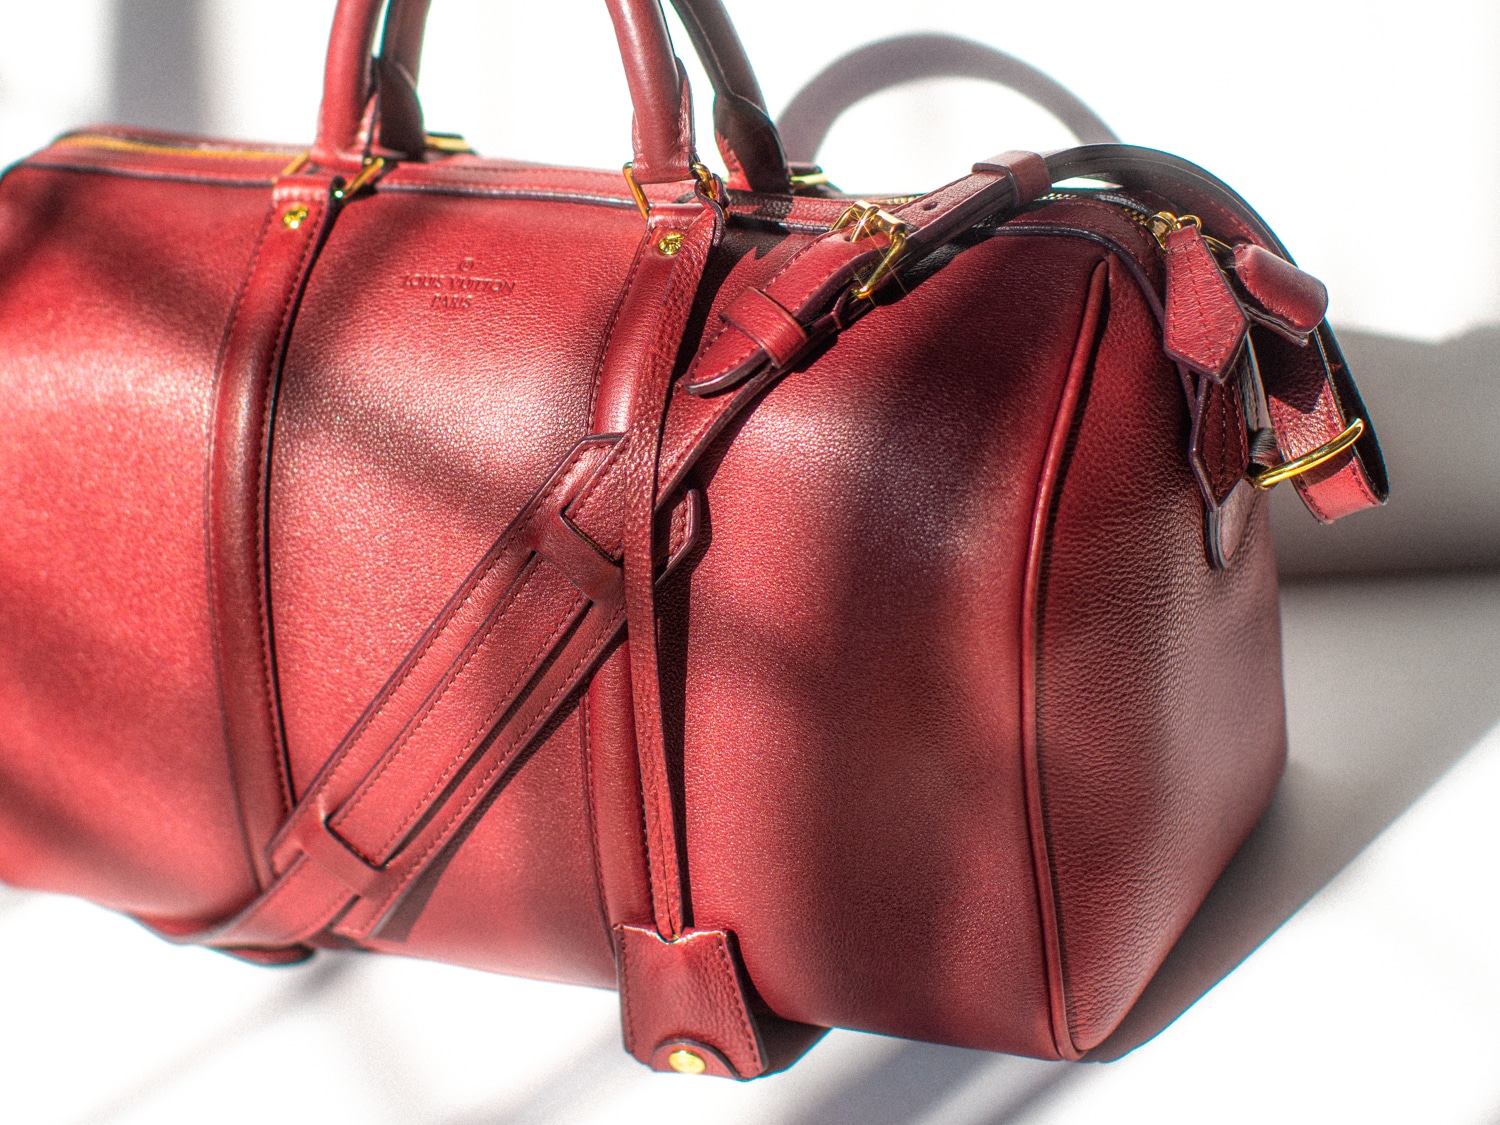 Sofia Coppola: New SC Bag For Louis Vuitton - Journal - I Want To